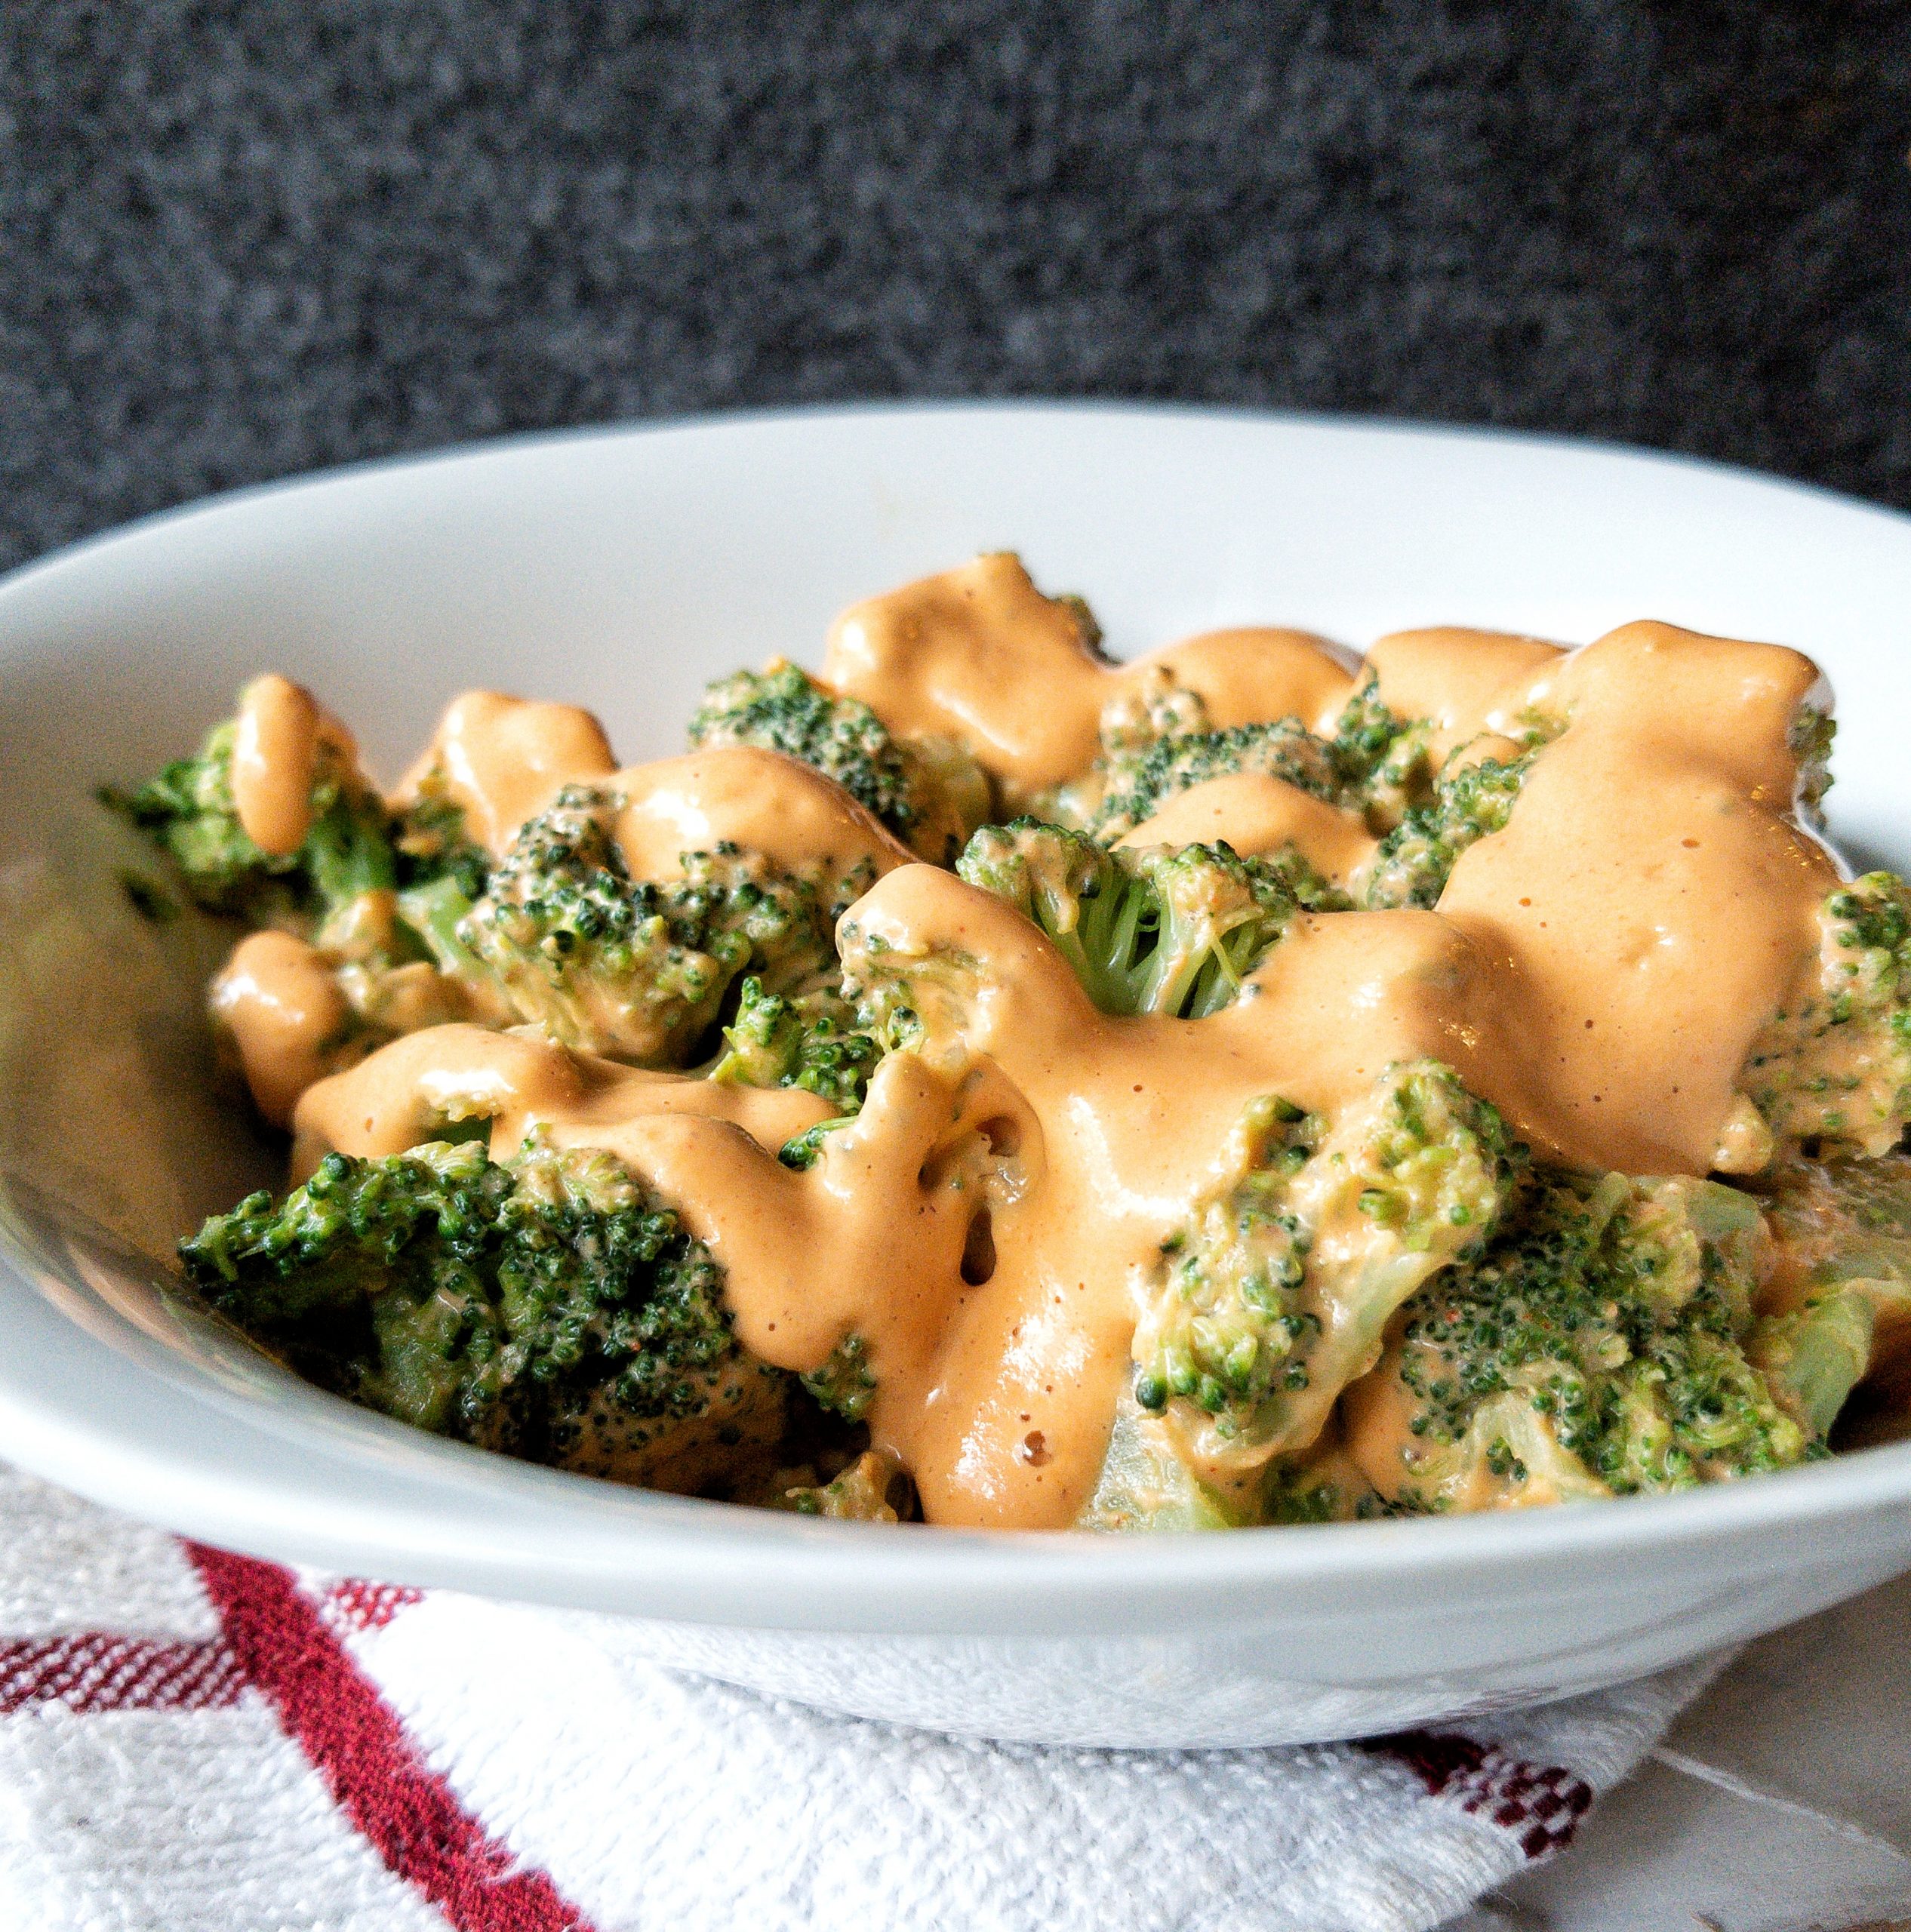 Broccoli with vegan cheese sauce